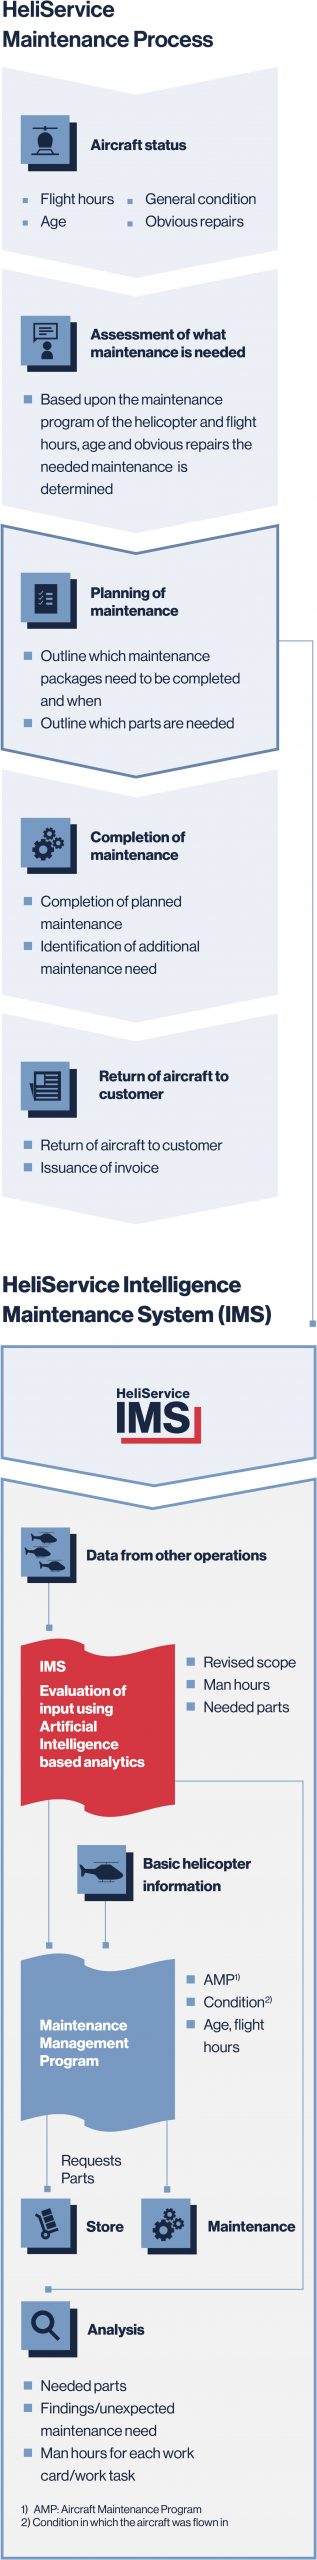 HeliService Maintenance process explained